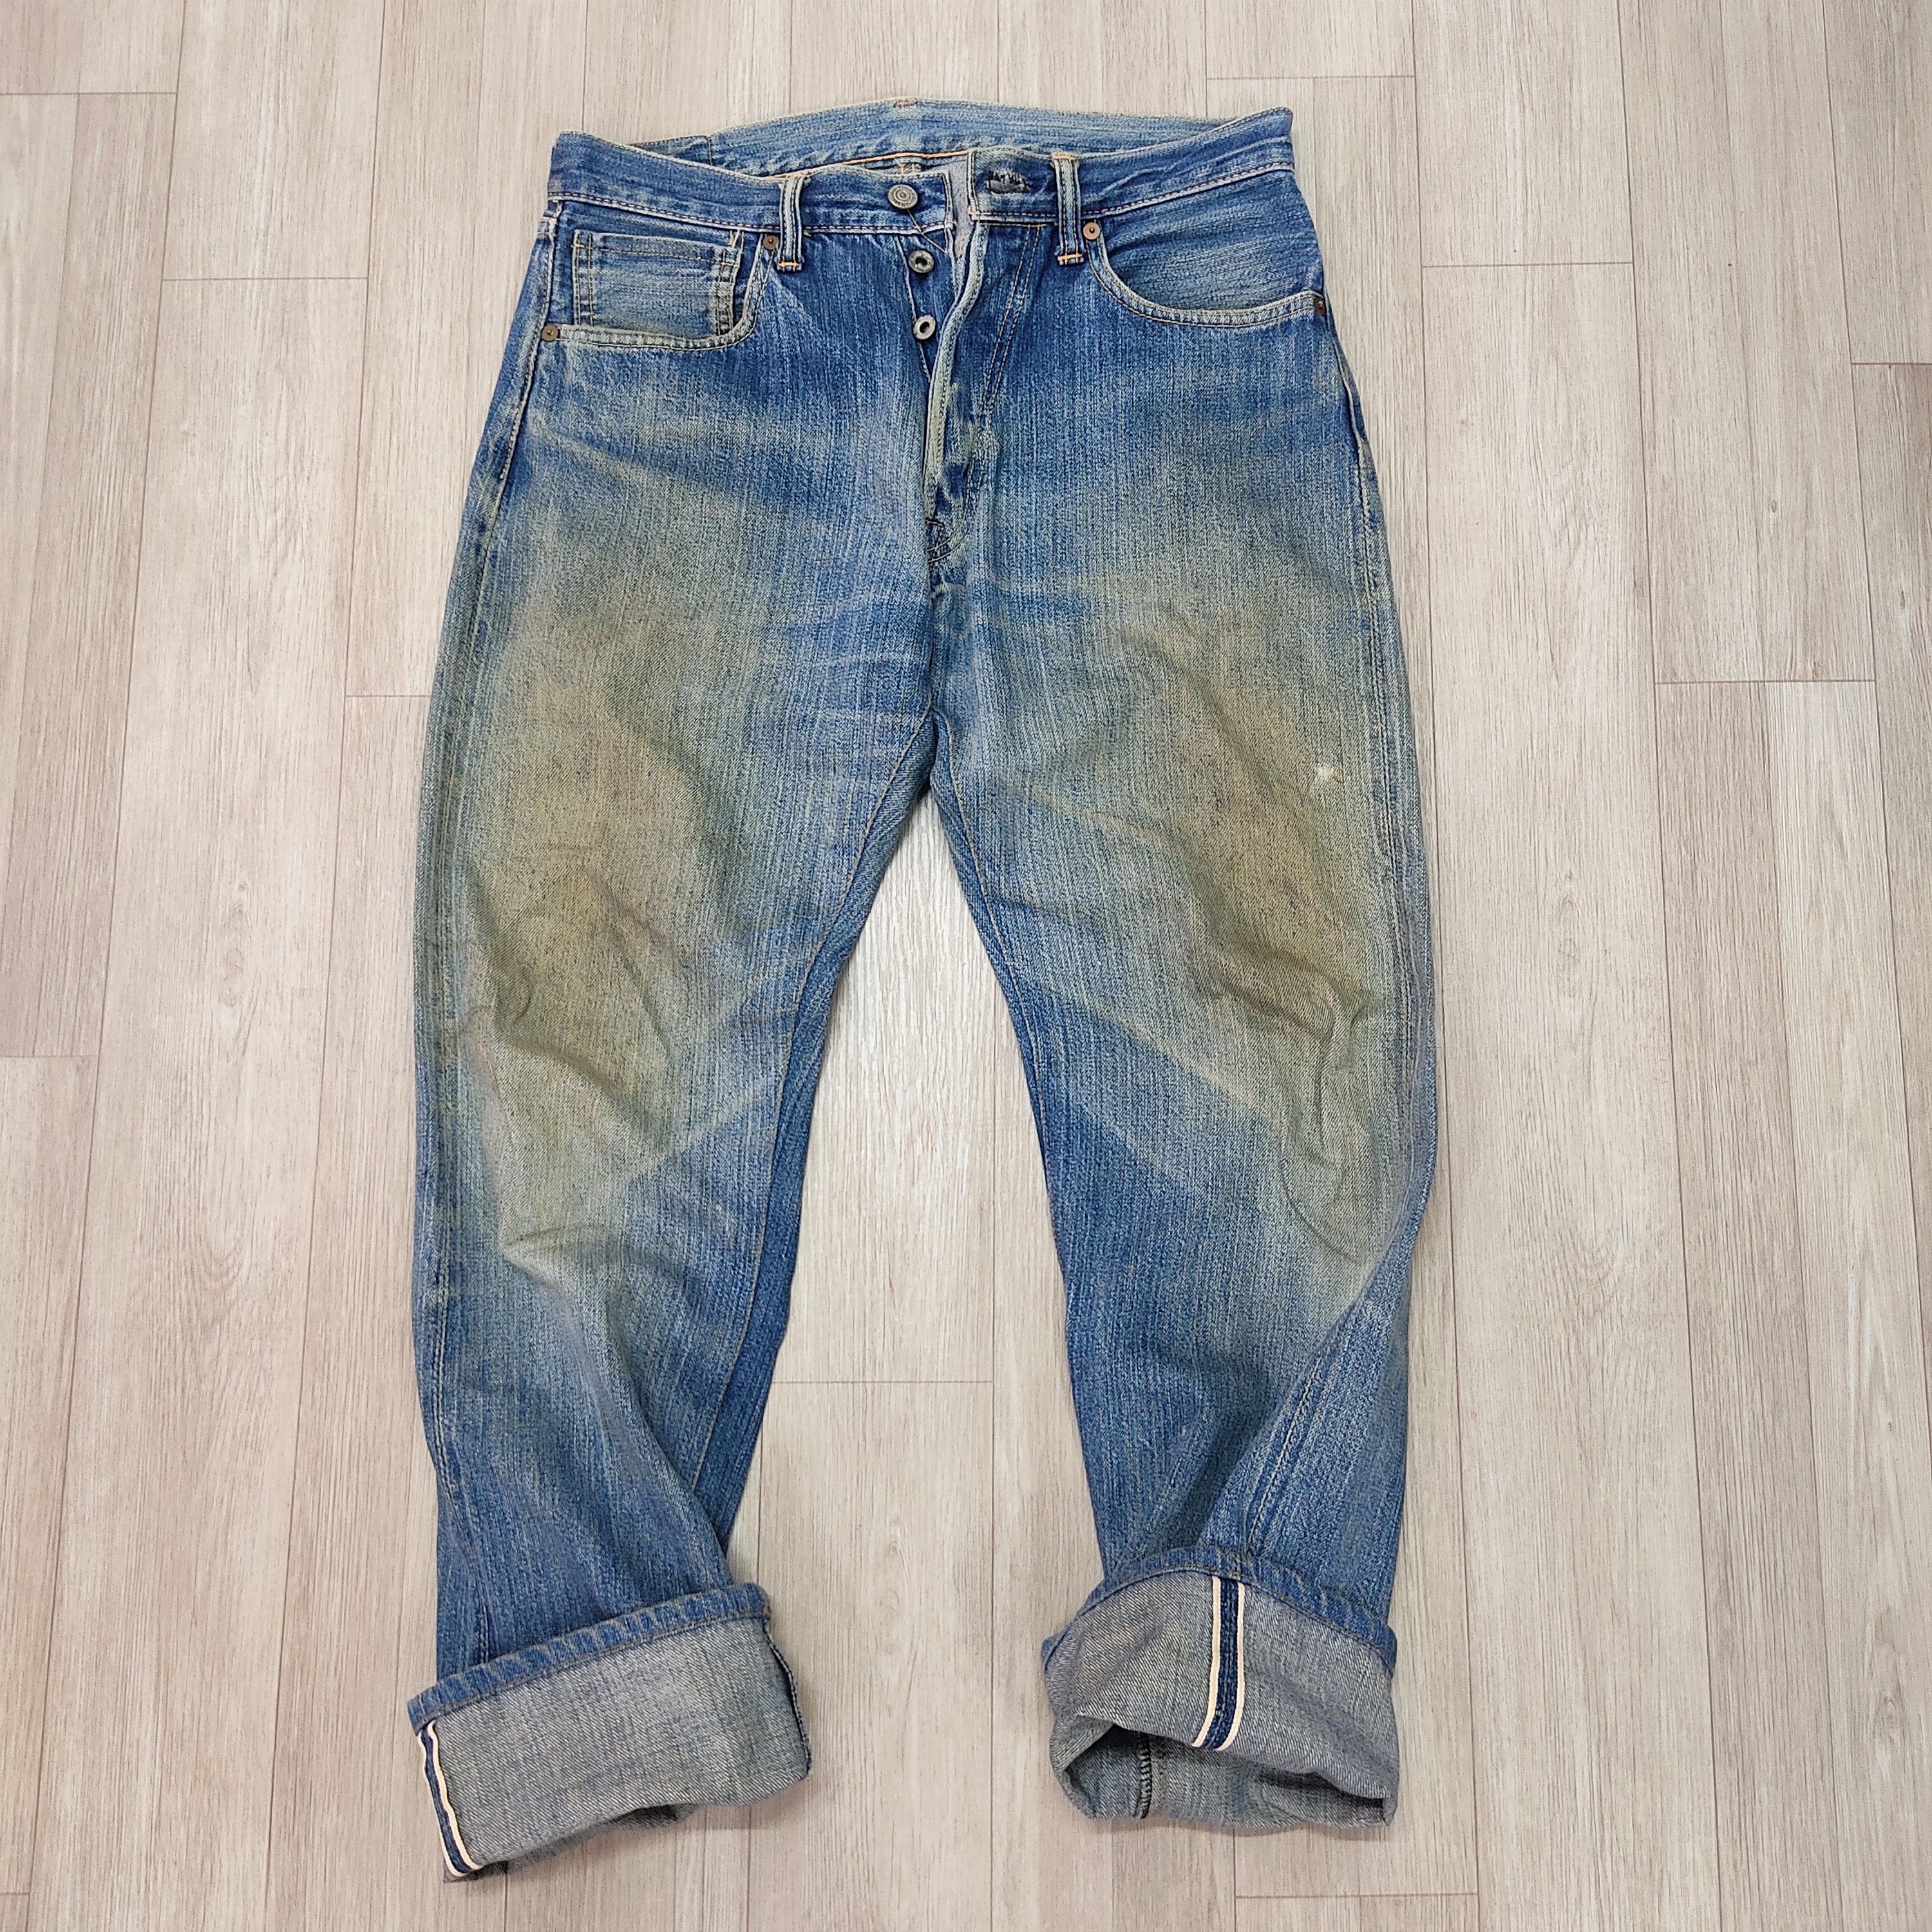 Vintage Cloze Jeans Japanese Selvedge Denim Pants - 3